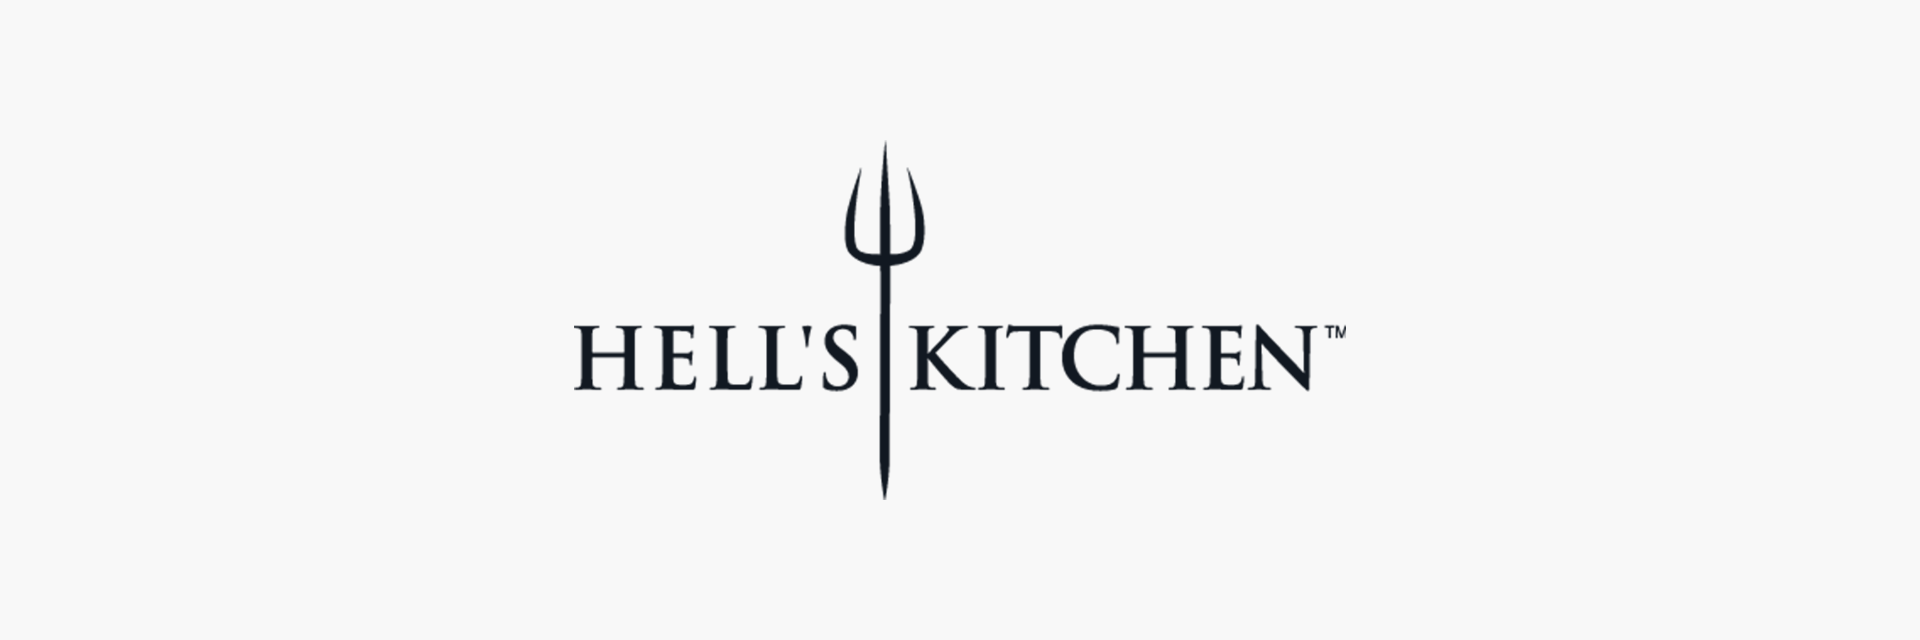 Hell's Logo - Hells Kitchen Logo Card » Redbubble Blog